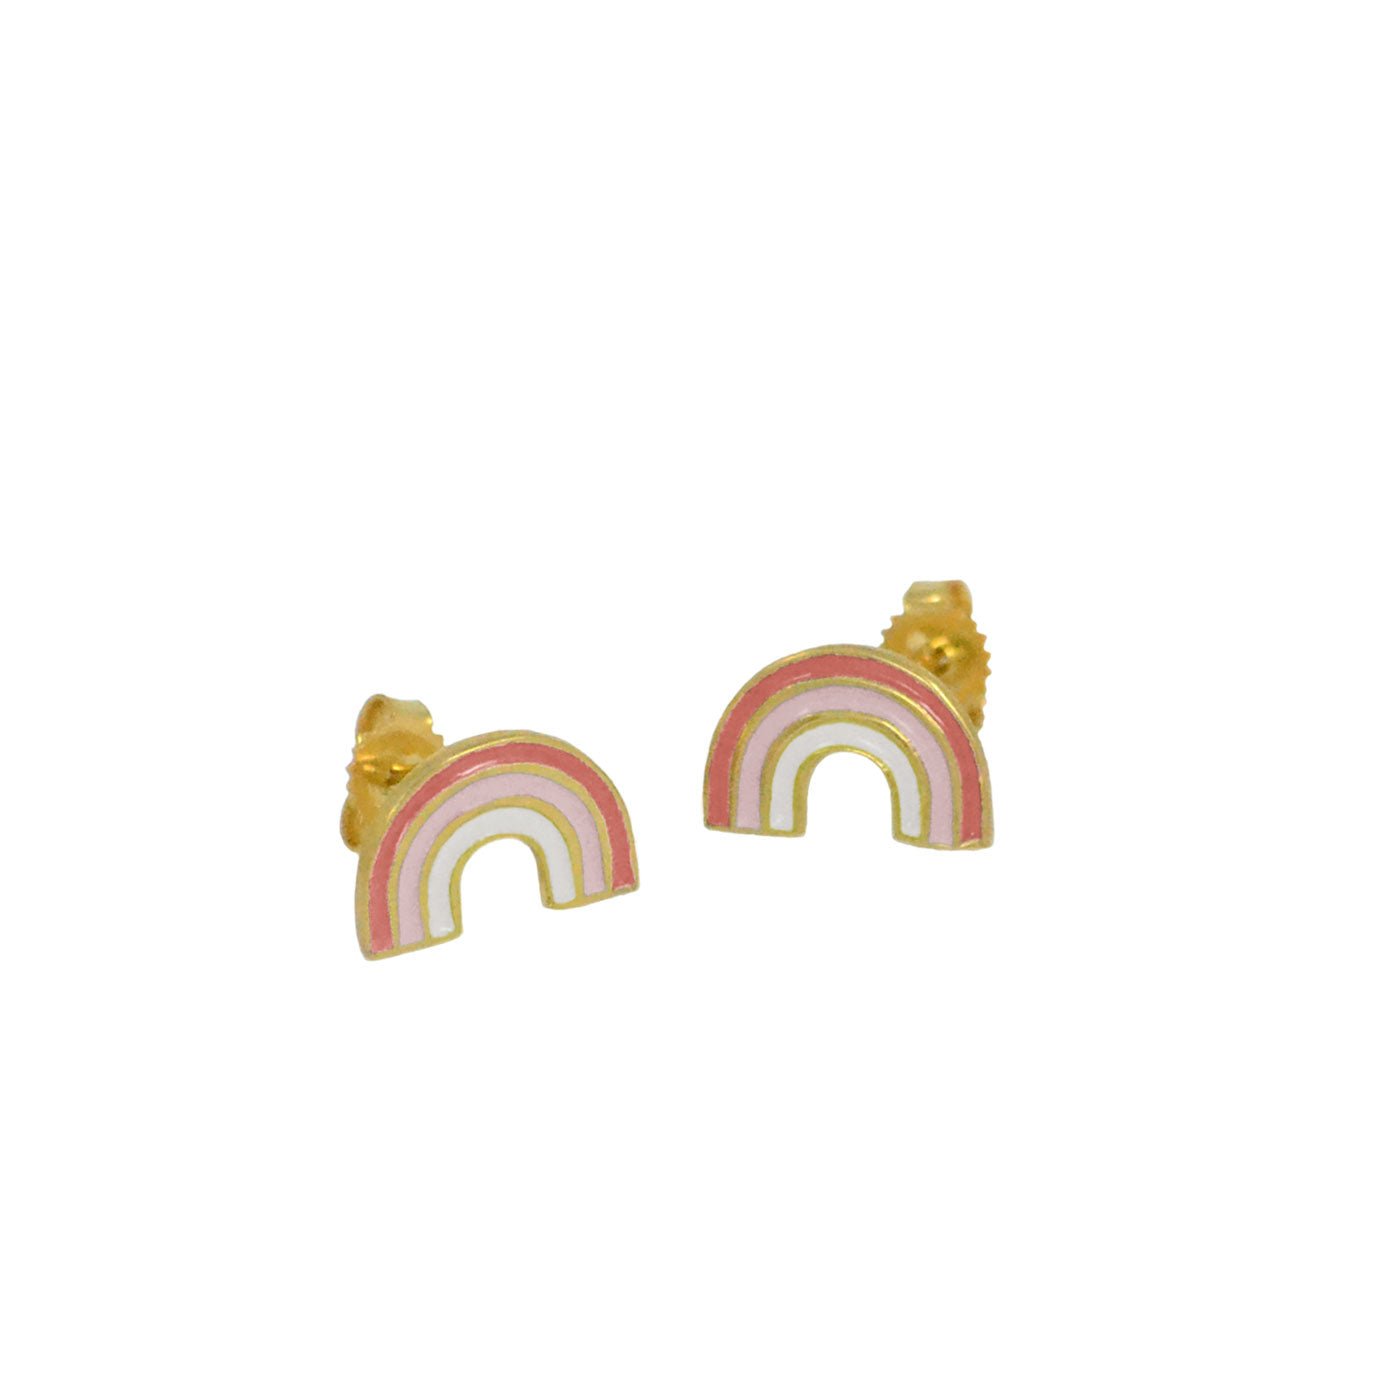 mini rainbow studs in gold vermeil with warm gradient enamel hues